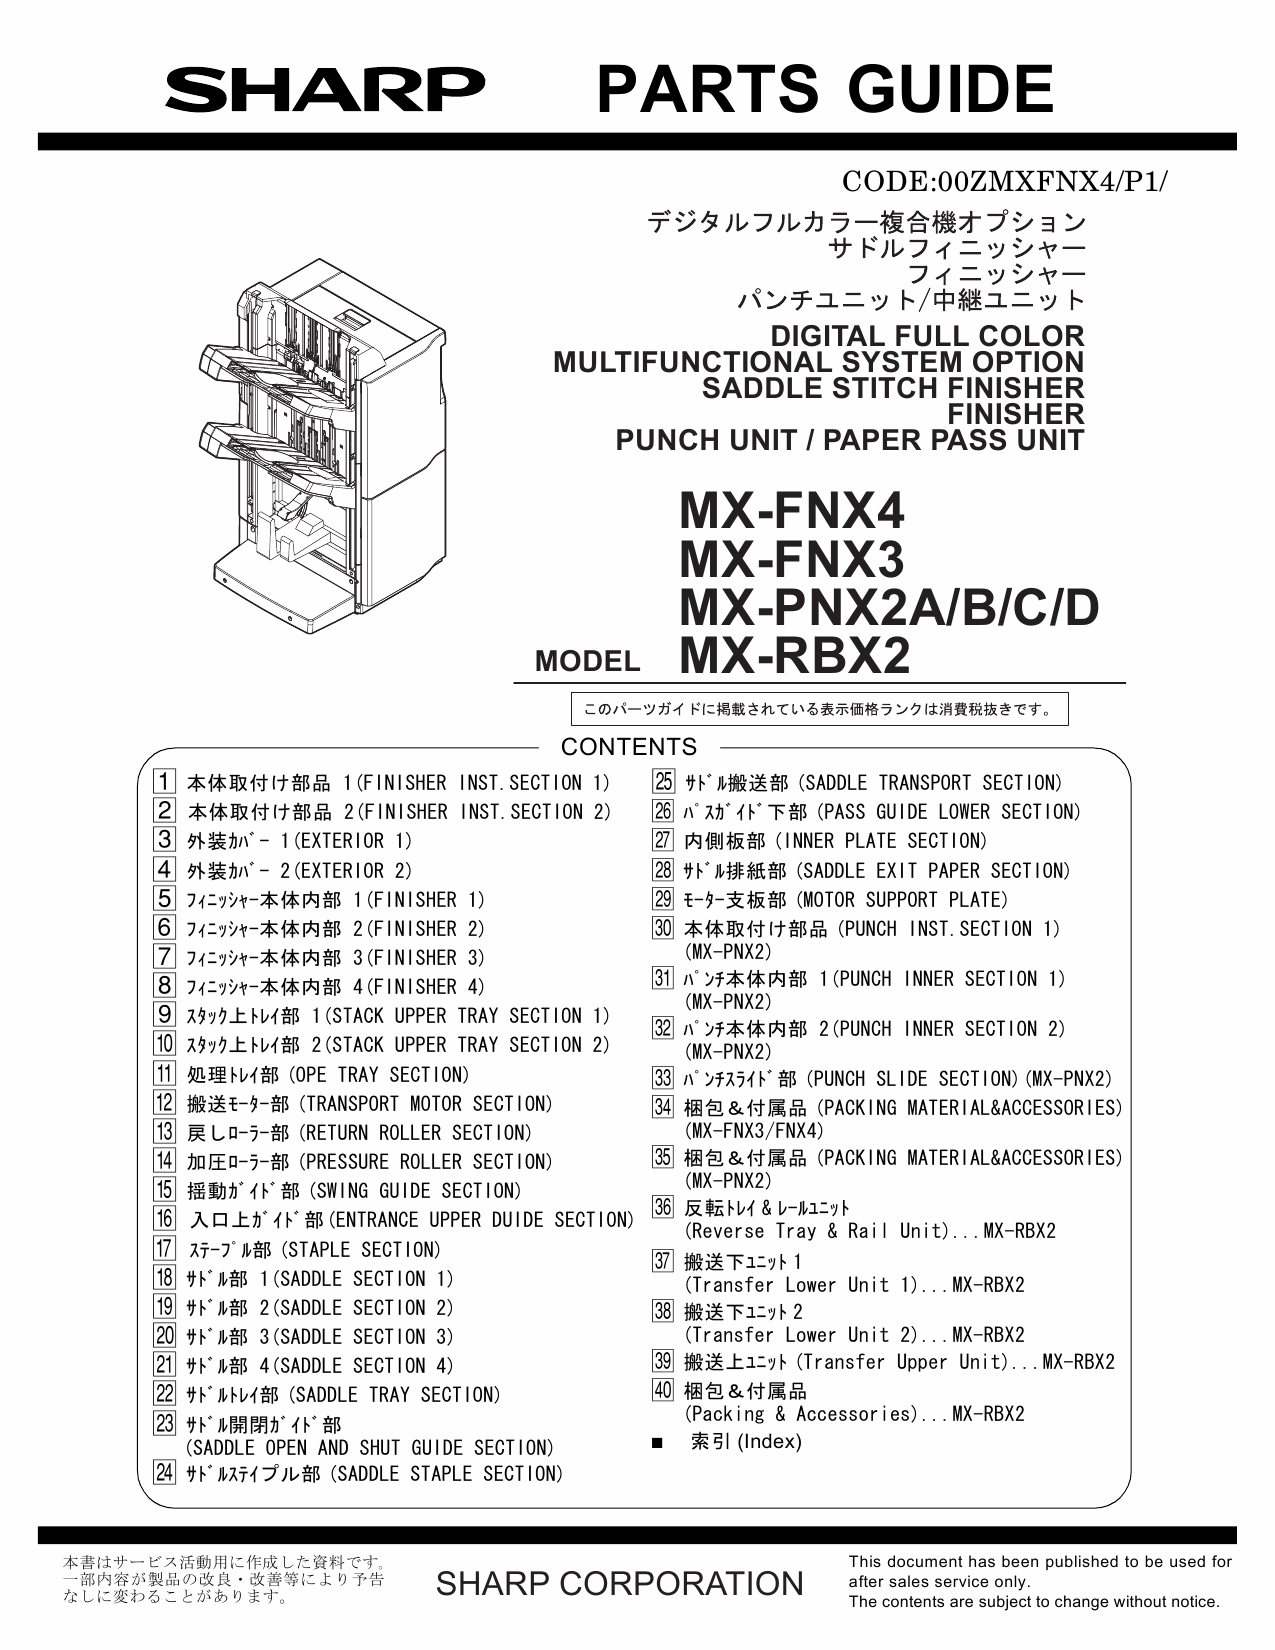 SHARP MX FNX3 FNX4 PNX2 RBX2 Parts Guide Manual-1